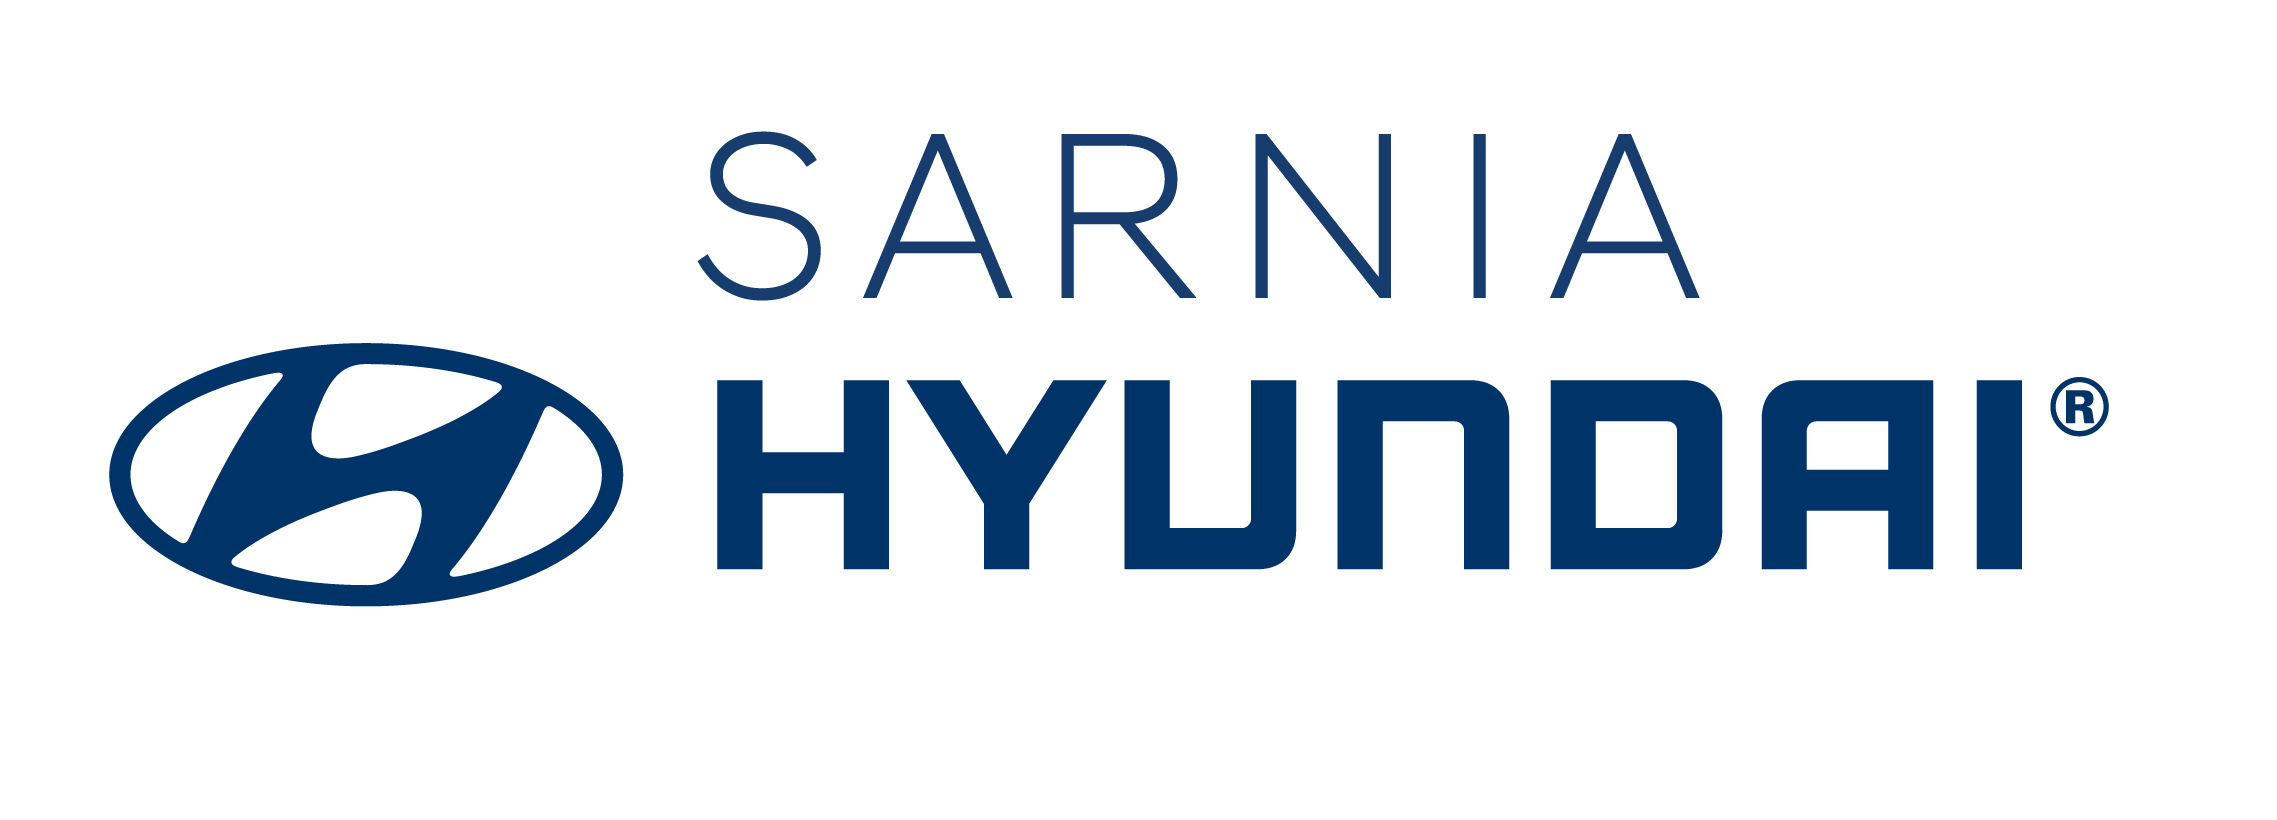 Sarnia Hyundai 